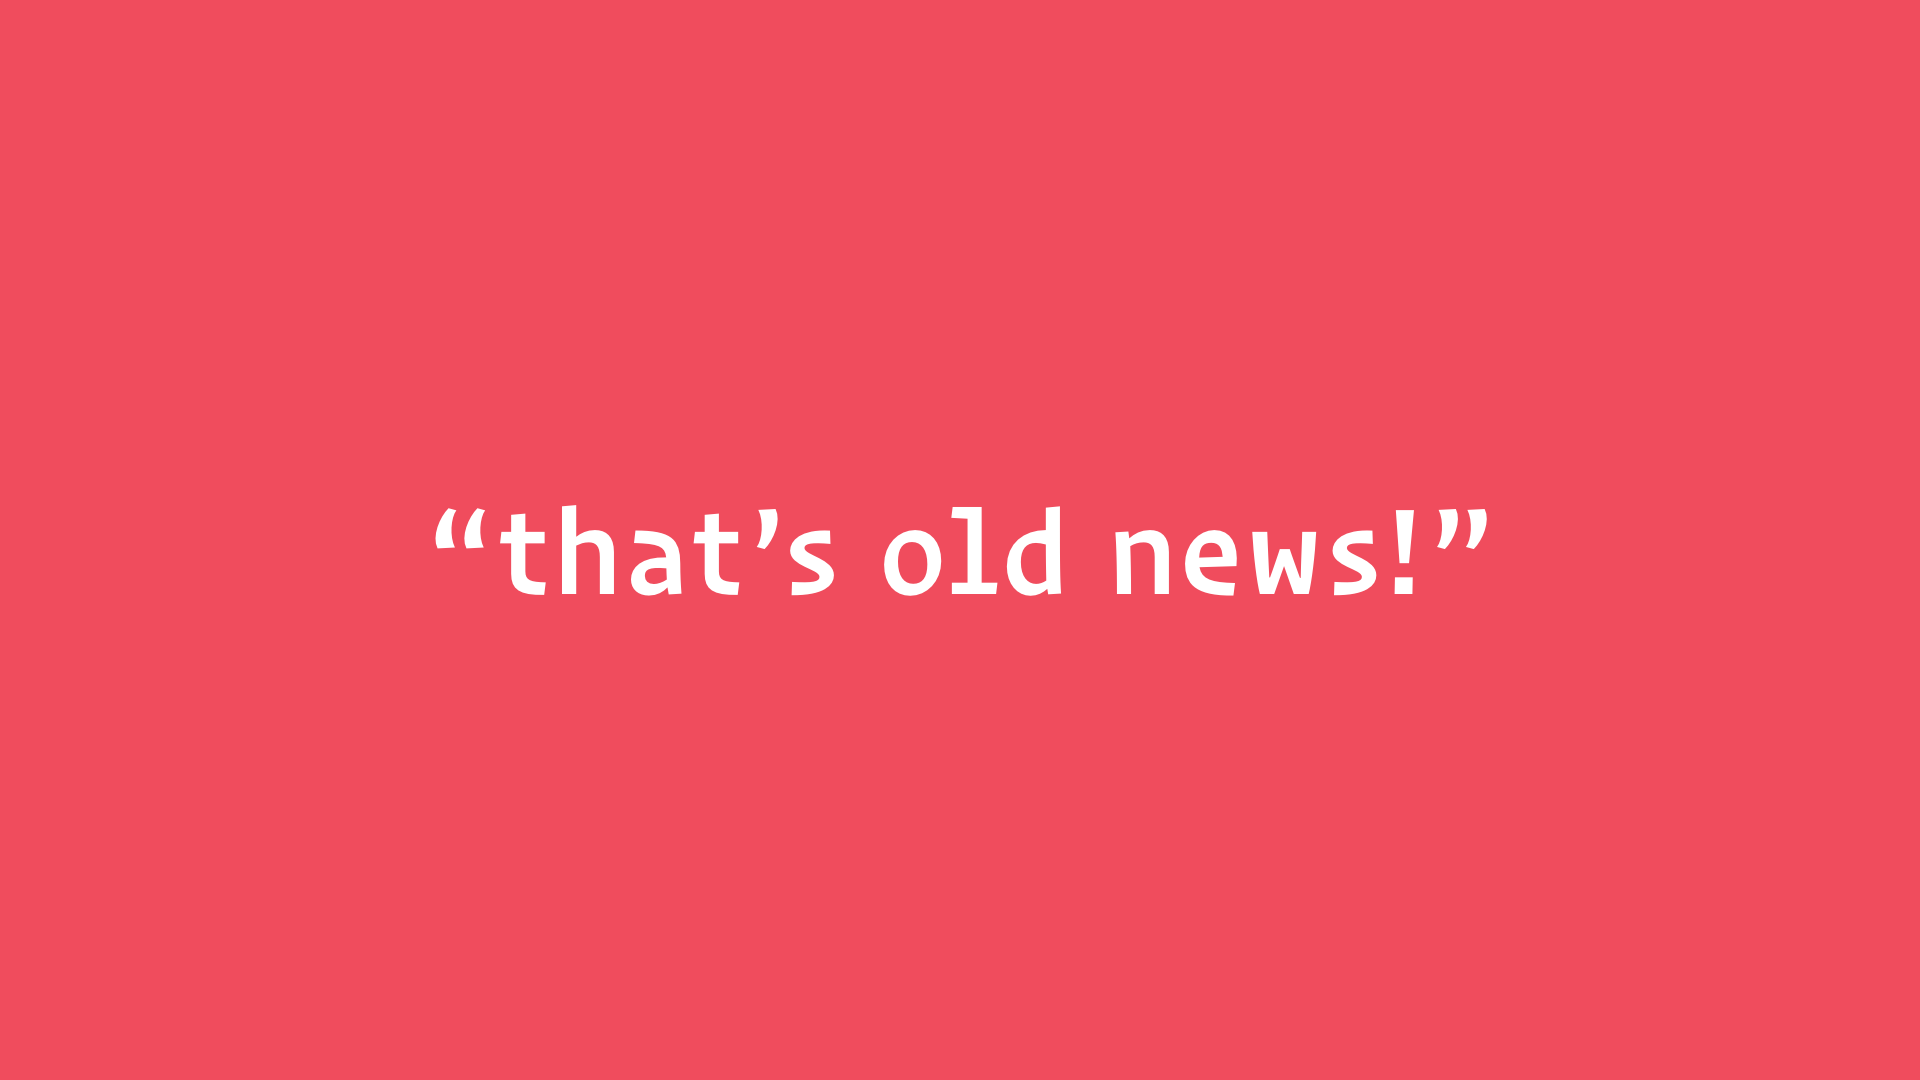 slide: “that’s old news!”